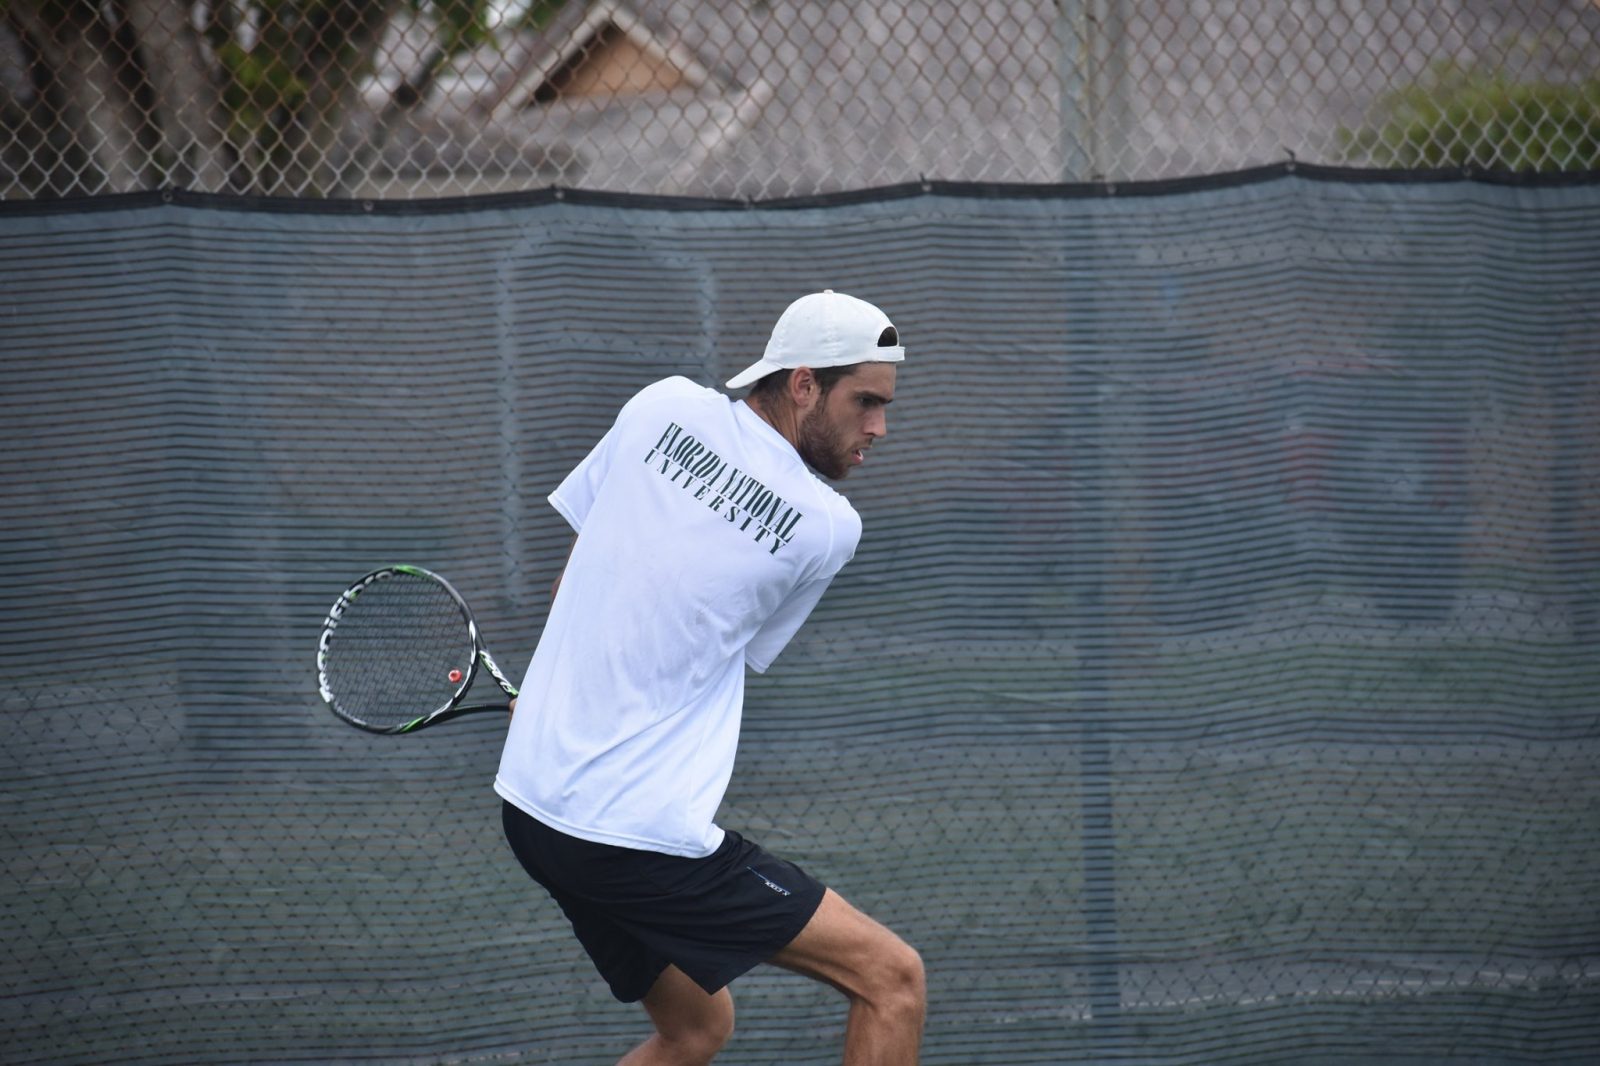 FNU tennis player hitting the ball